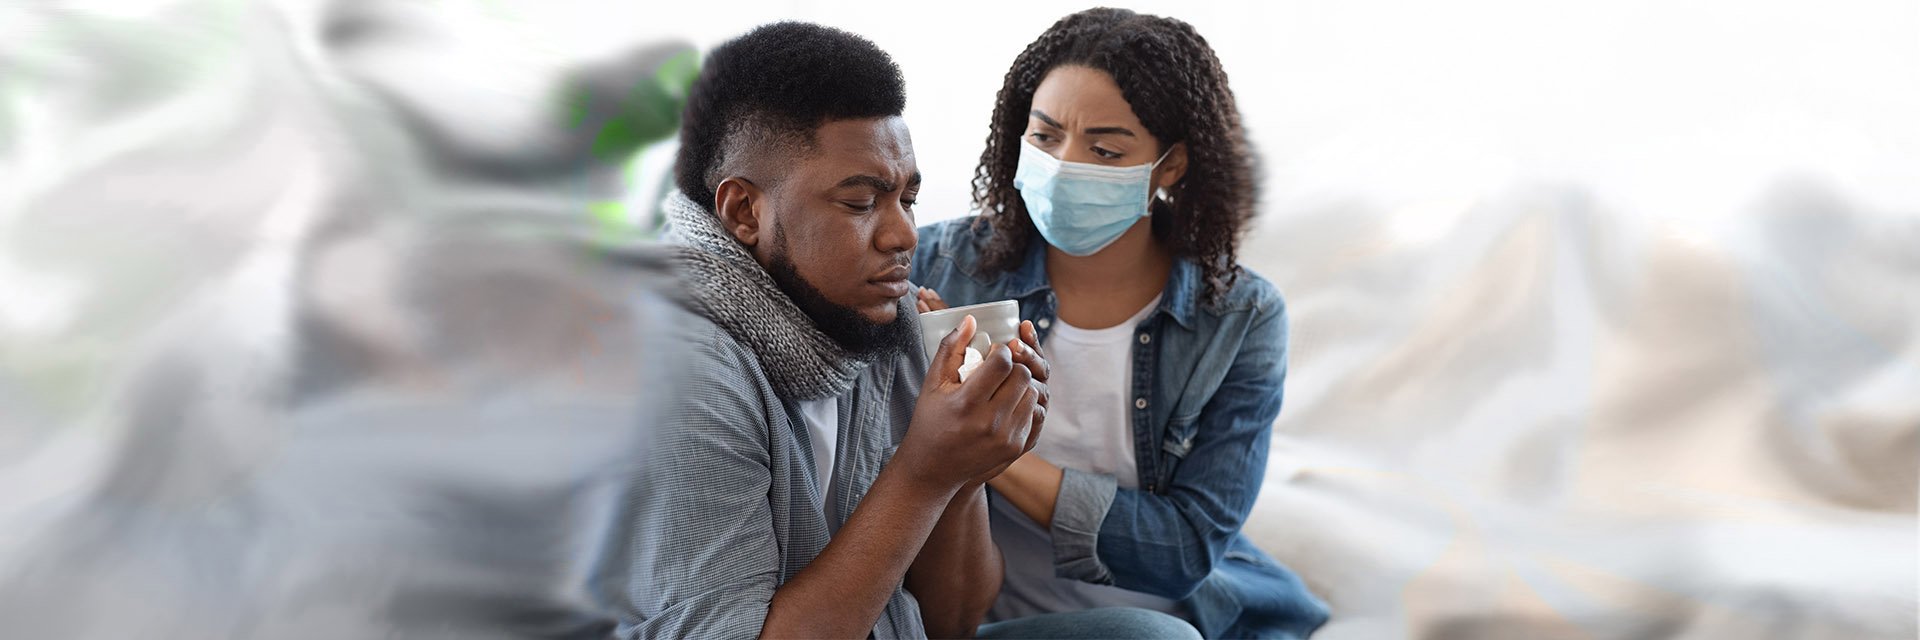 Woman wearing mask comforting sick man